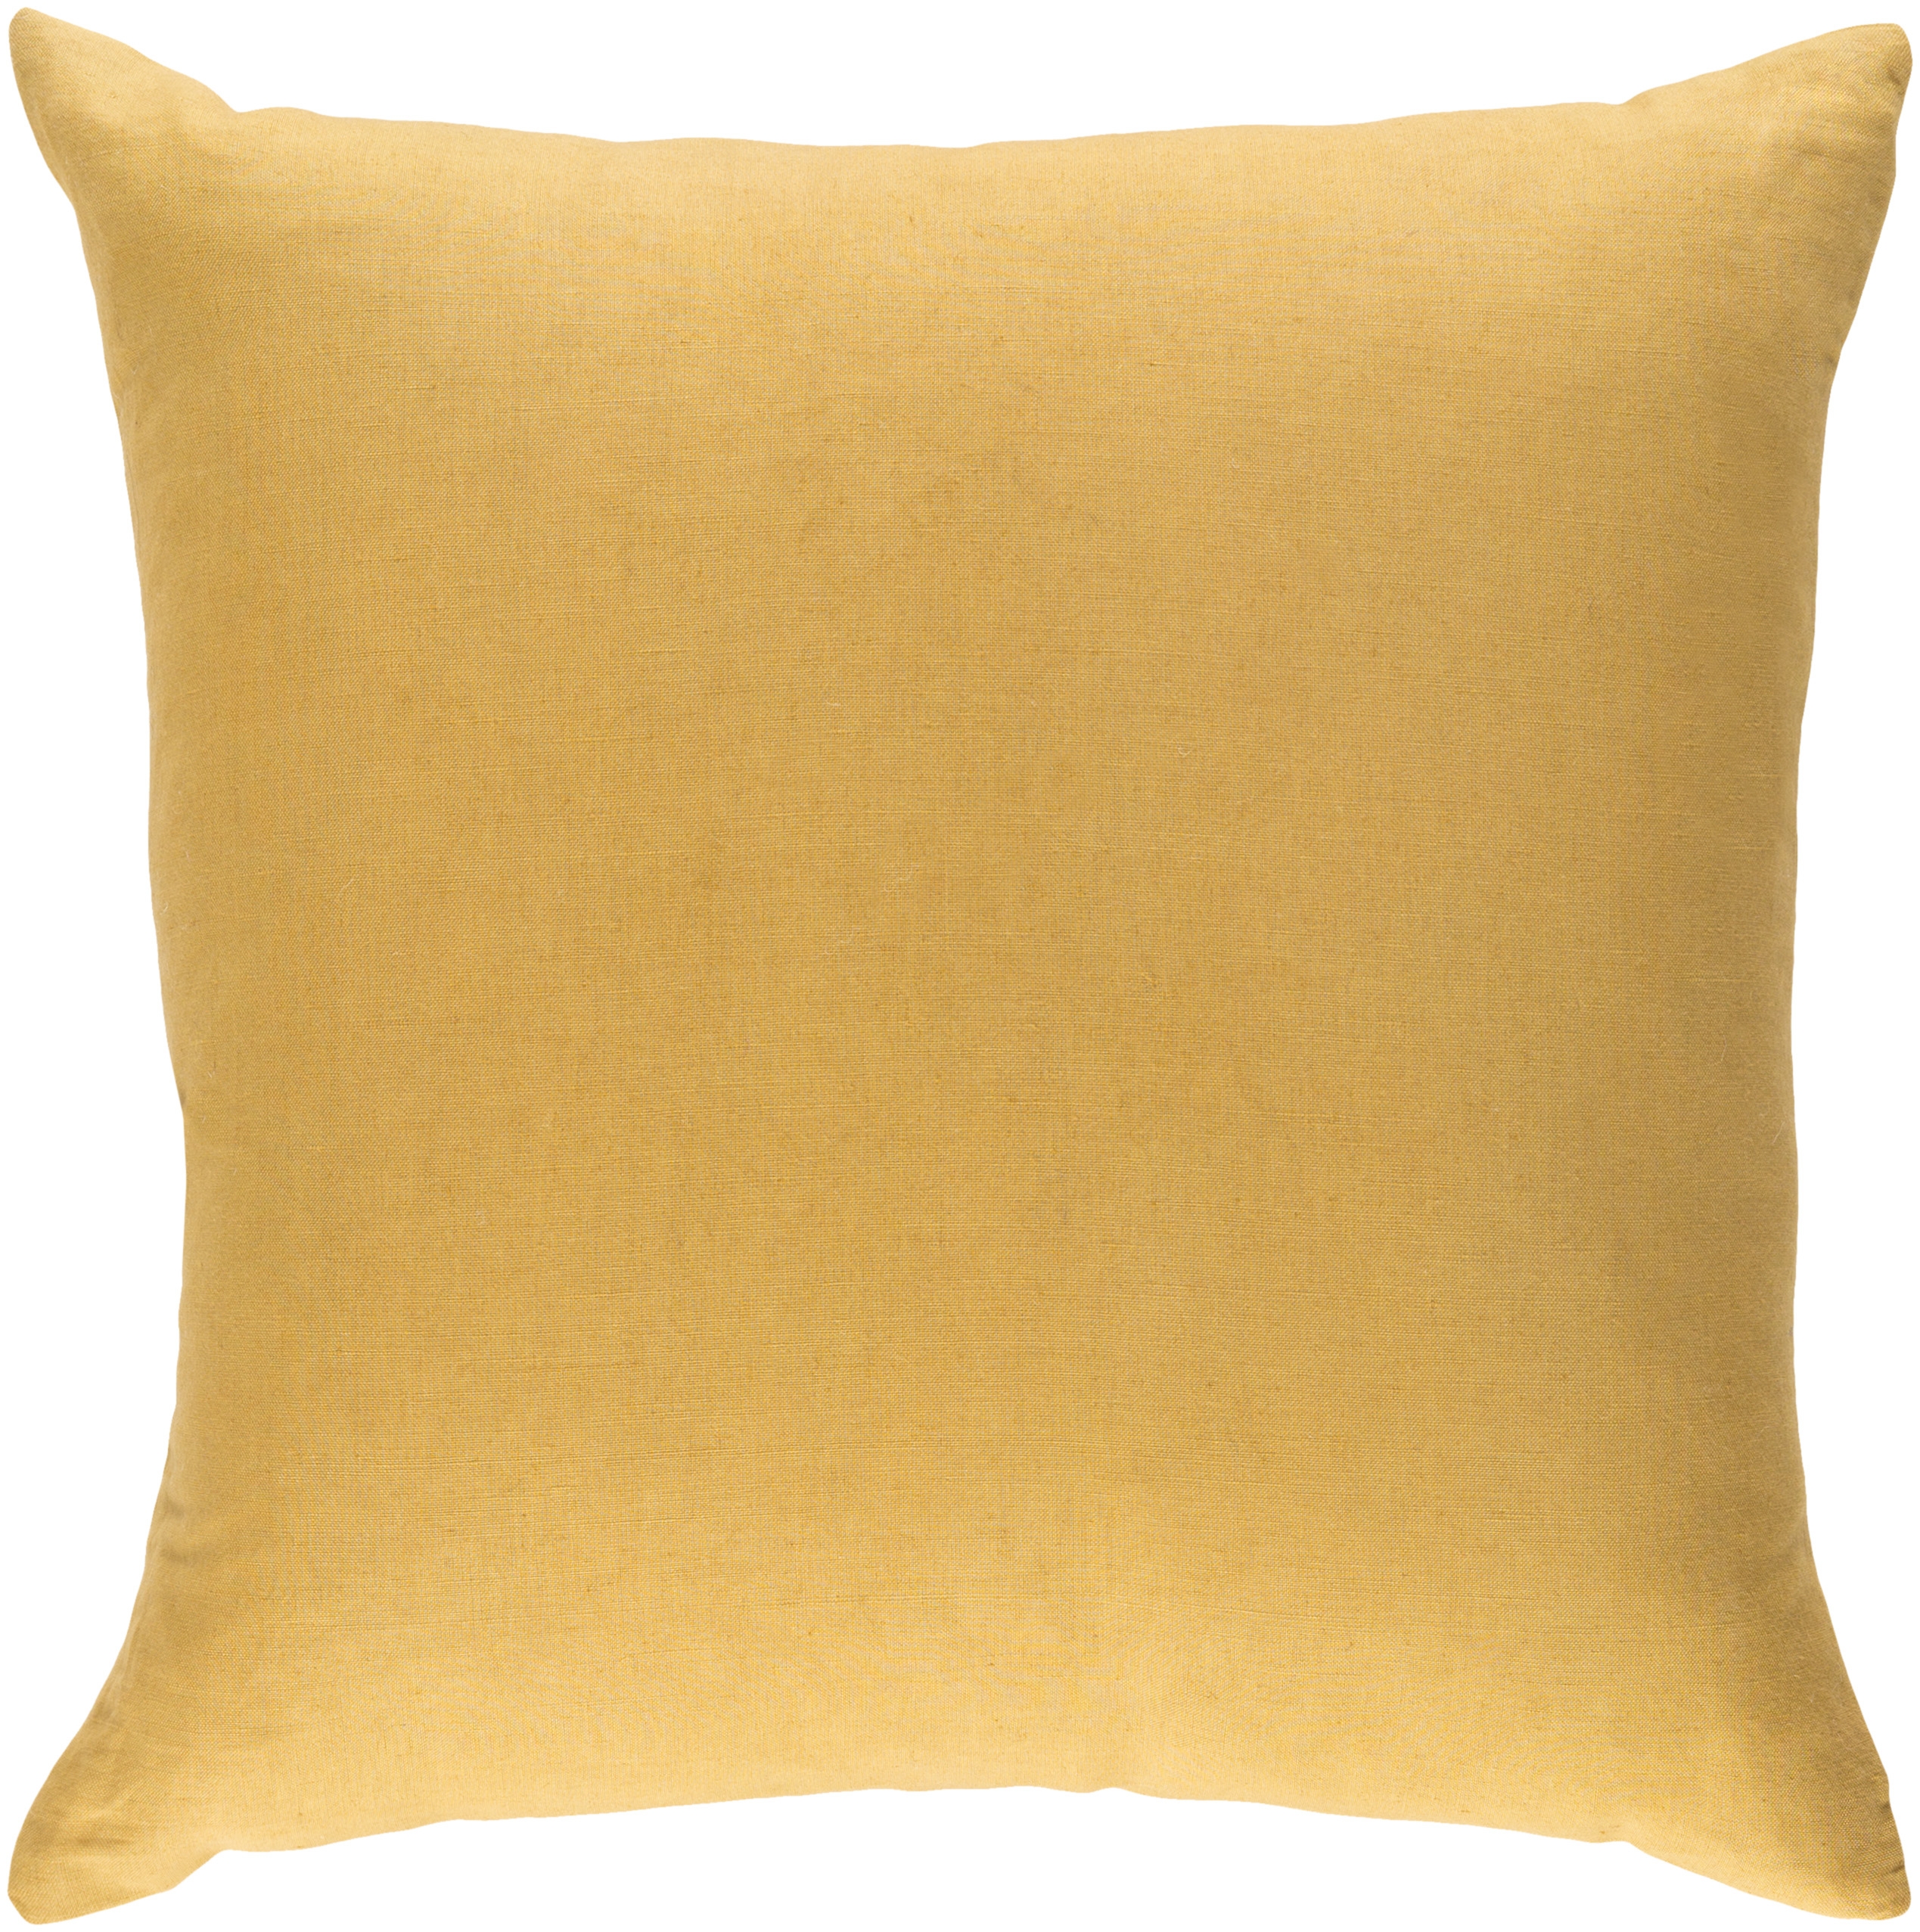 Ethiopia Throw Pillow, 18" x 18", with poly insert - Image 0